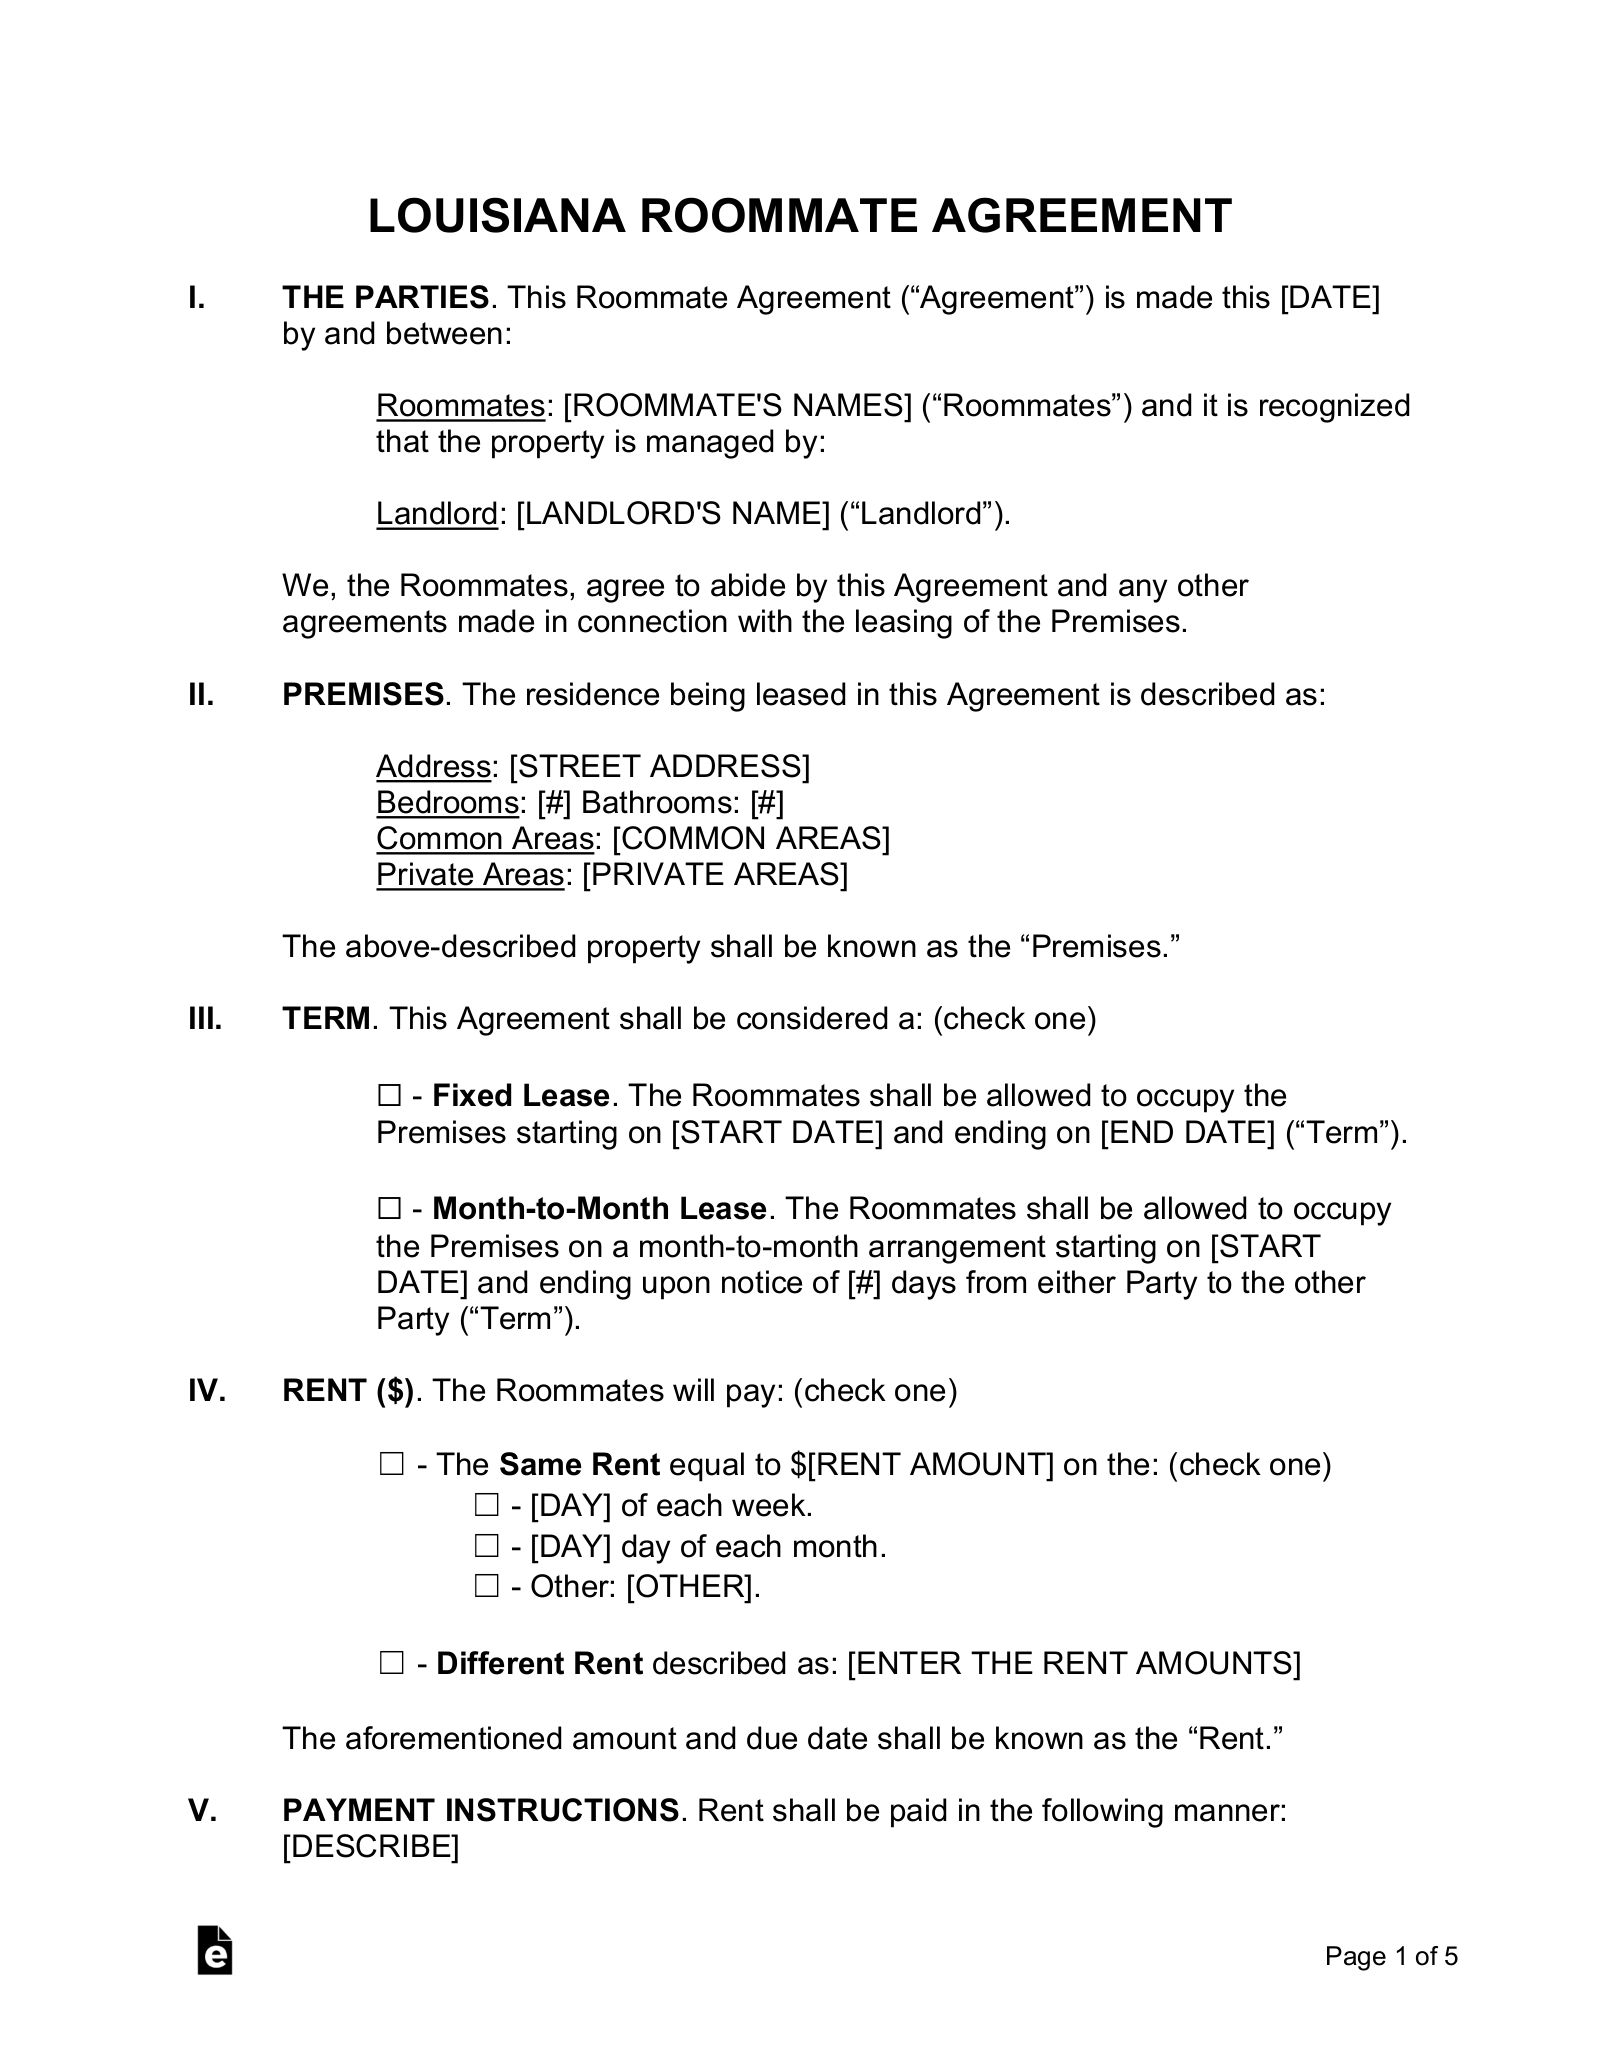 free louisiana roommate agreement template pdf word